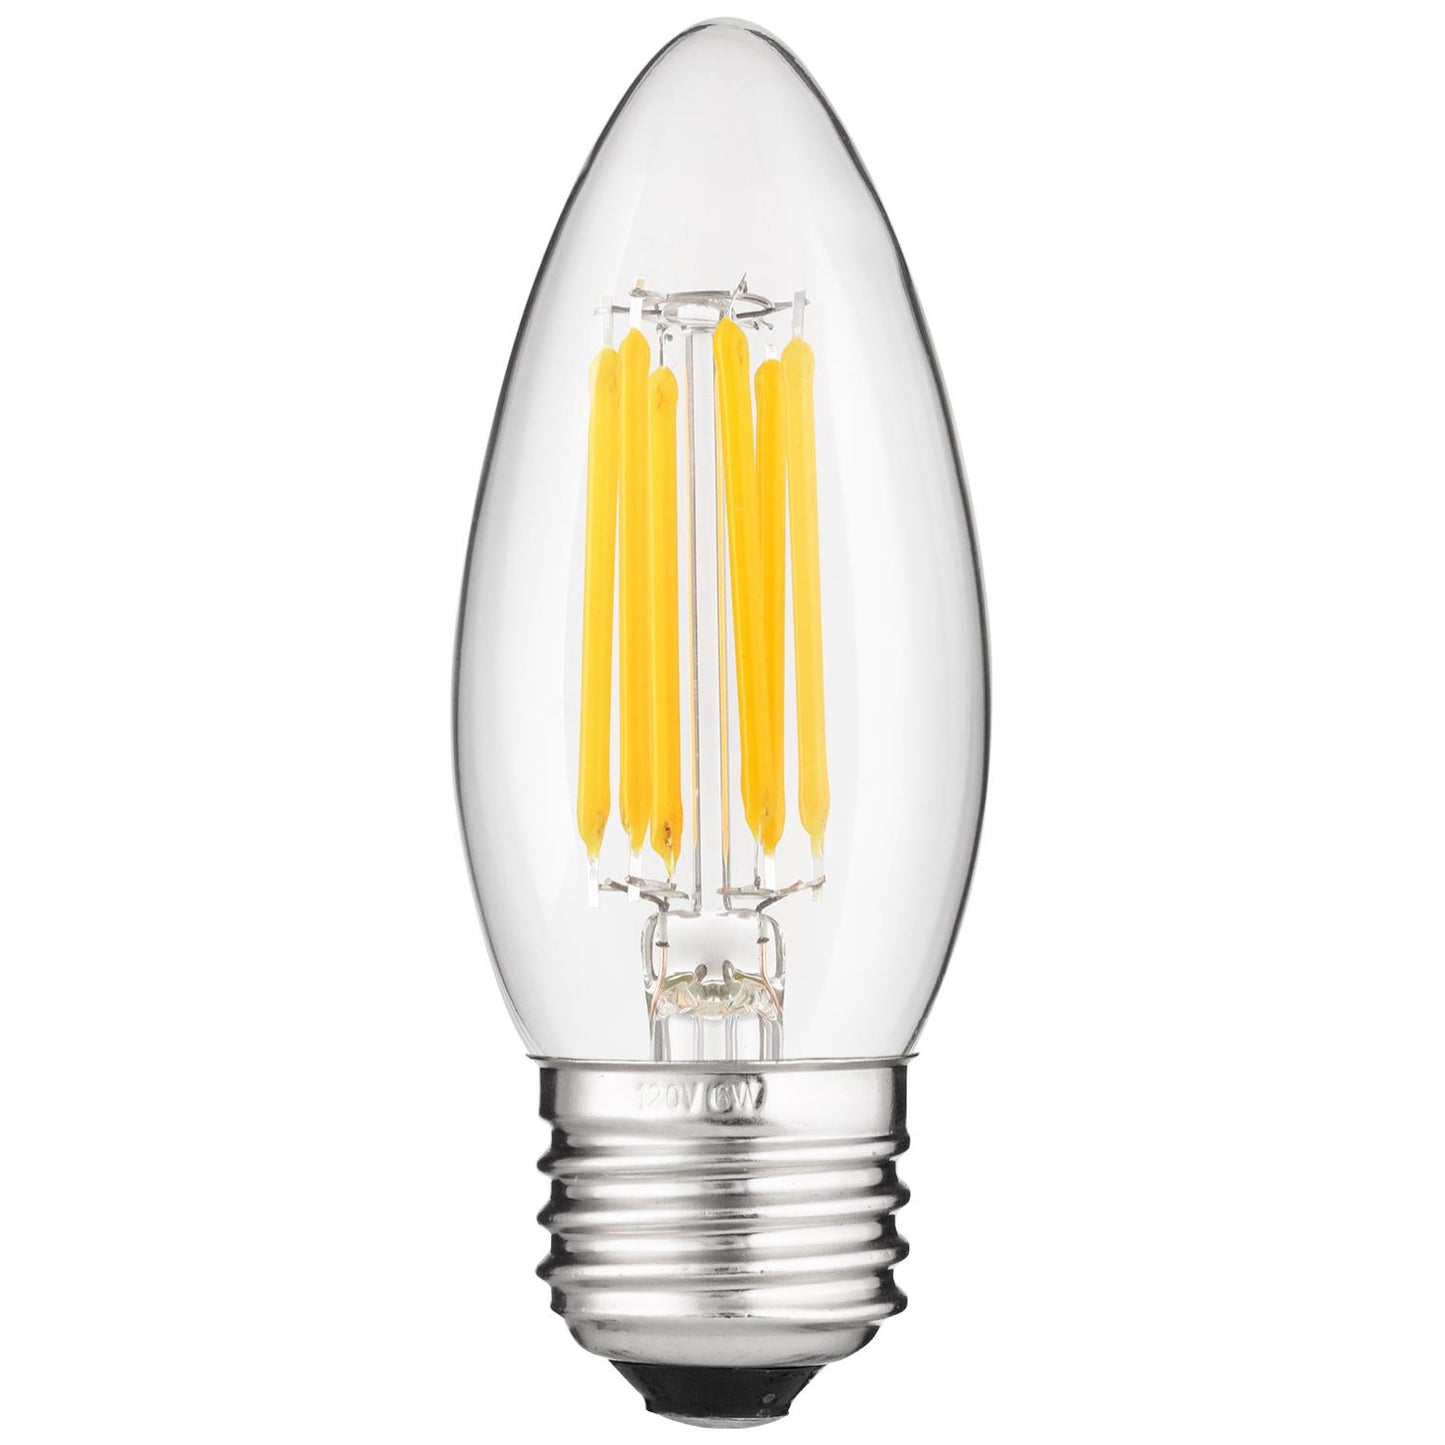 Sunlite LED 6W (60W Equivalent) Clear Filament Styled ETC Chandelier Light Bulbs With Torpedo Tip, 2700K Warm White Light, Medium (E26) Base